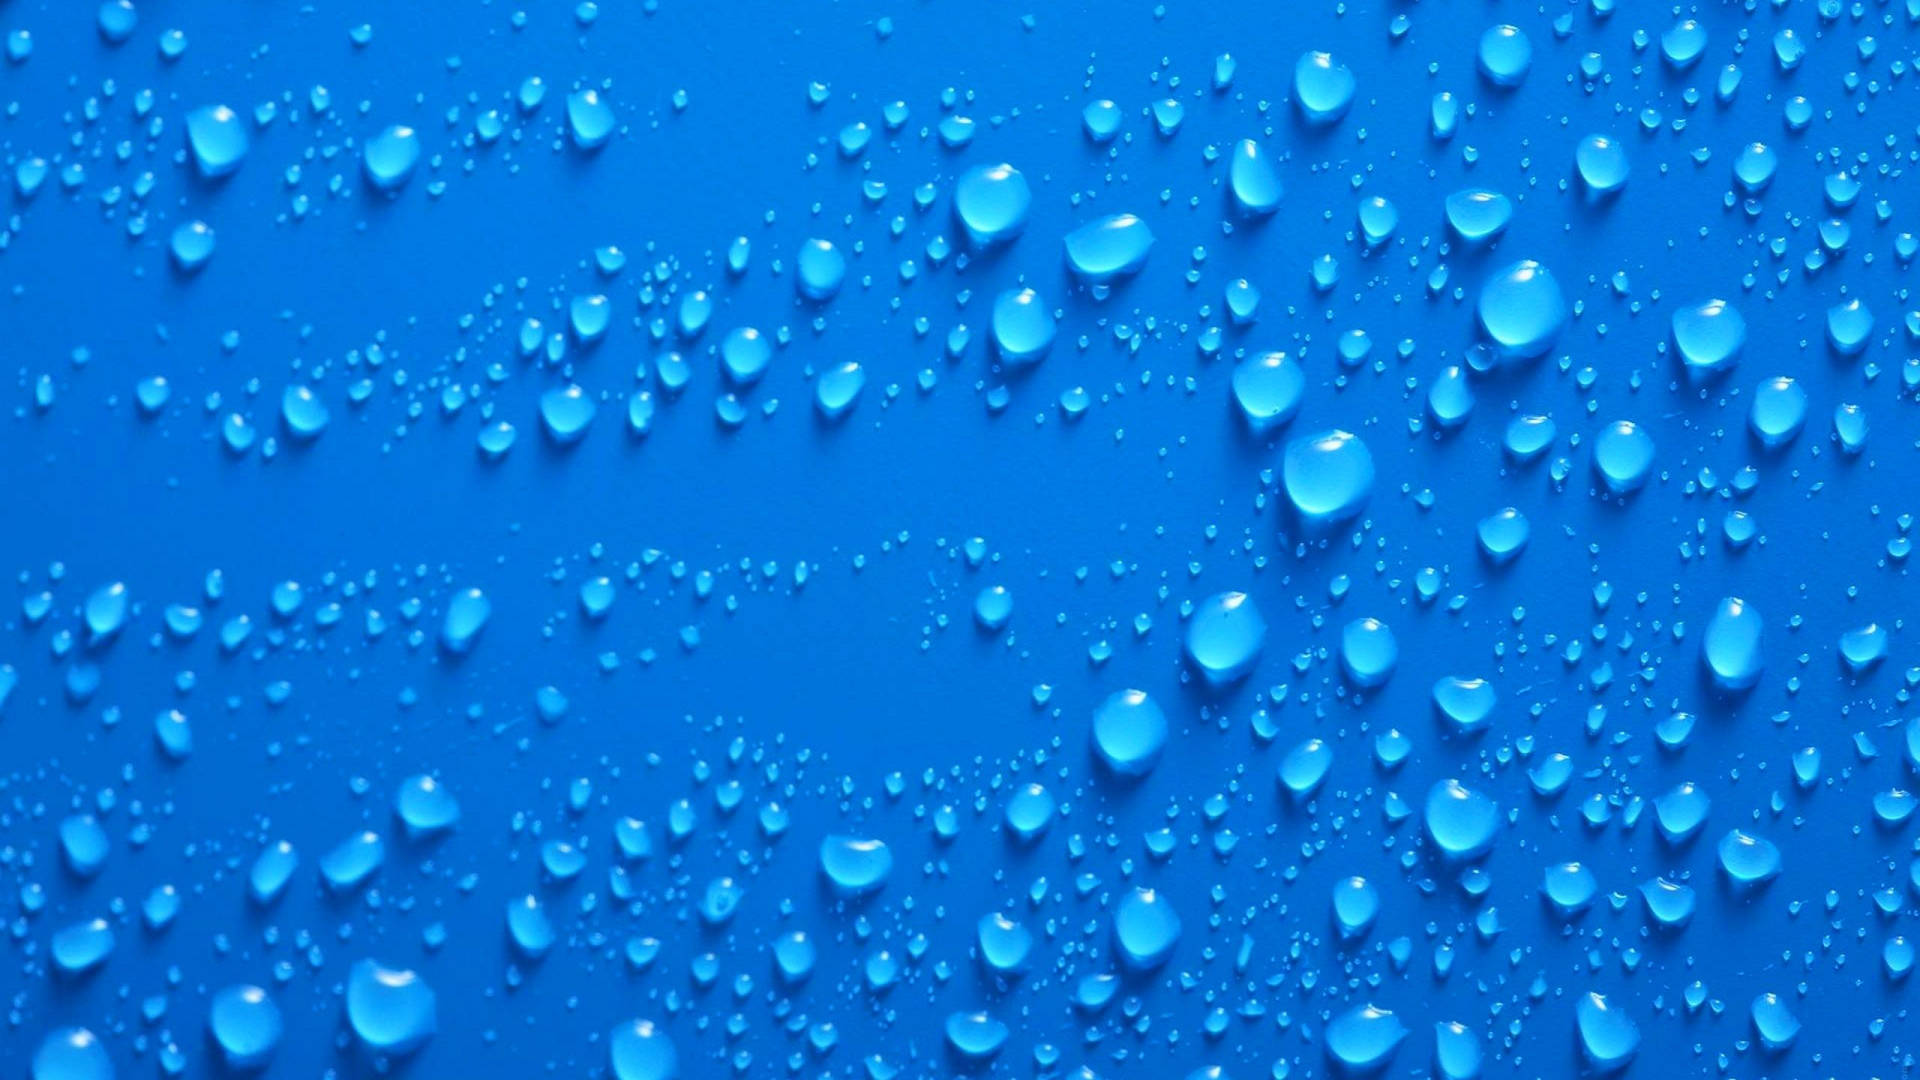 Plain Blue Water Drops Background